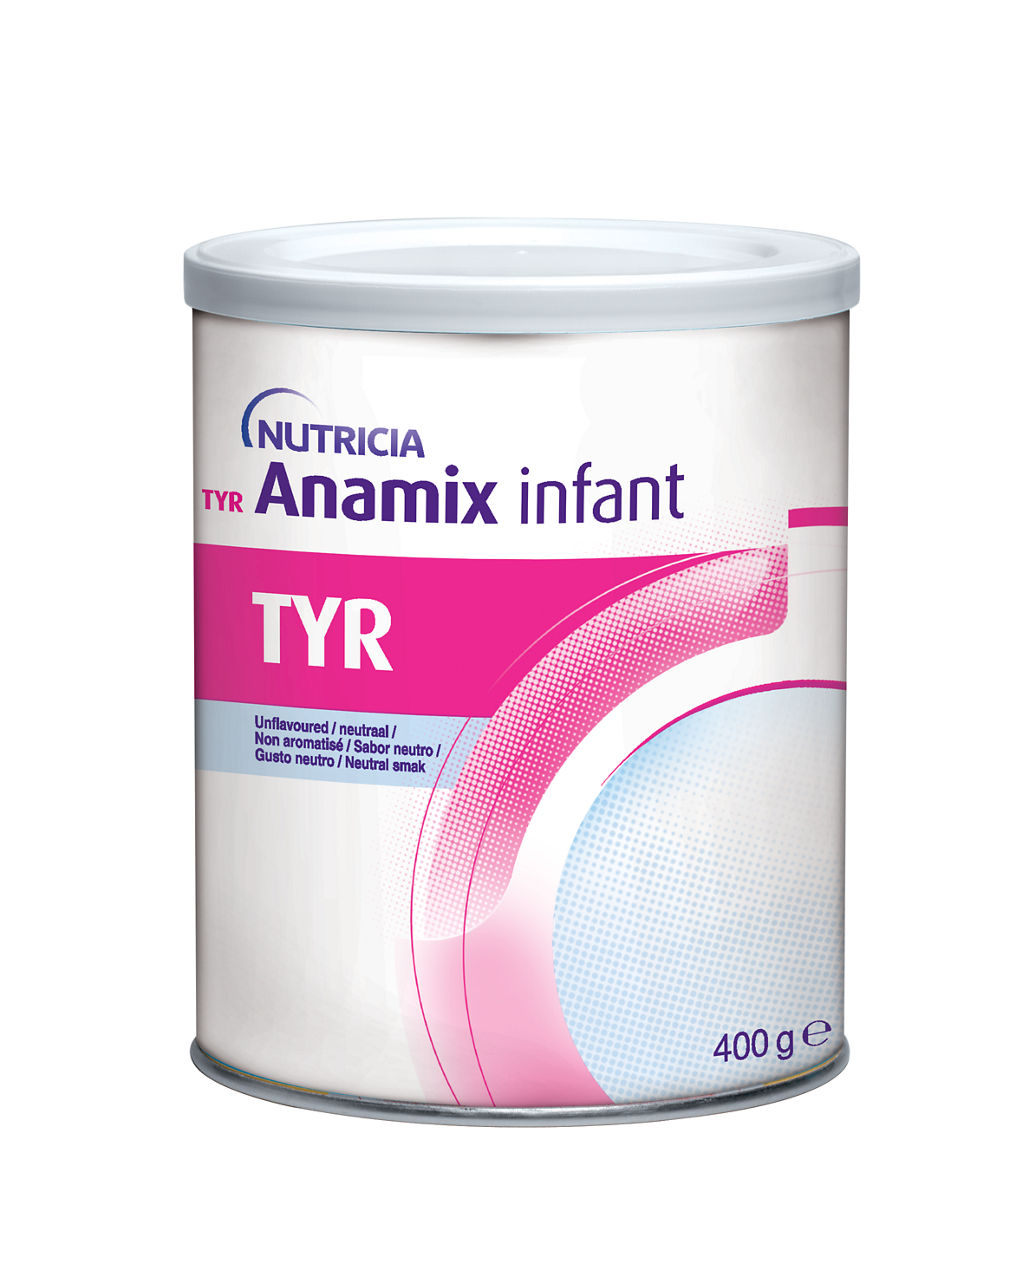 en-GB,TYR Anamix Infant